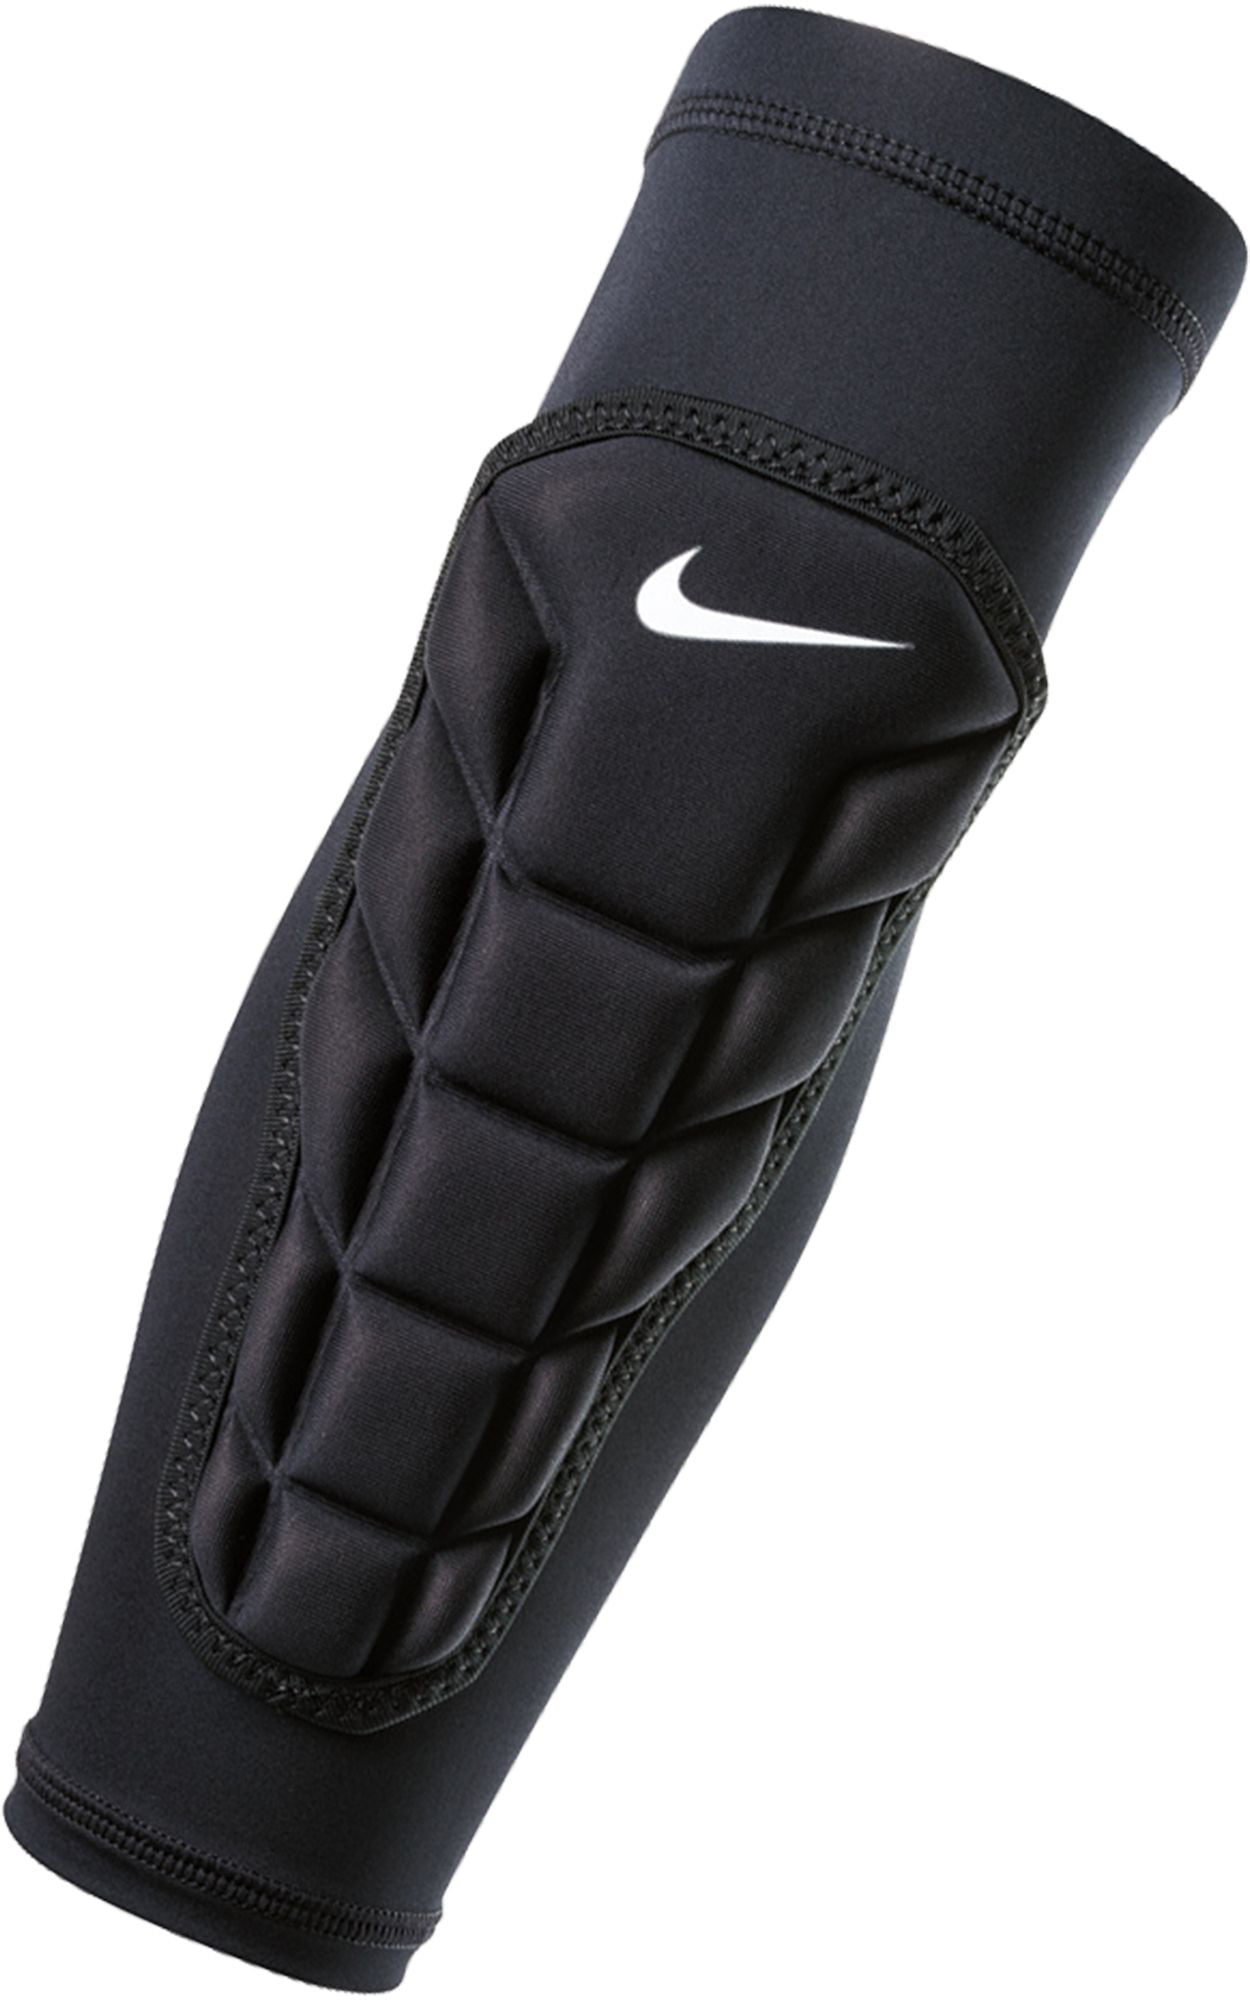 Nike Adult Amp 2.0 Padded Arm Shivers - Walmart.com - Walmart.com